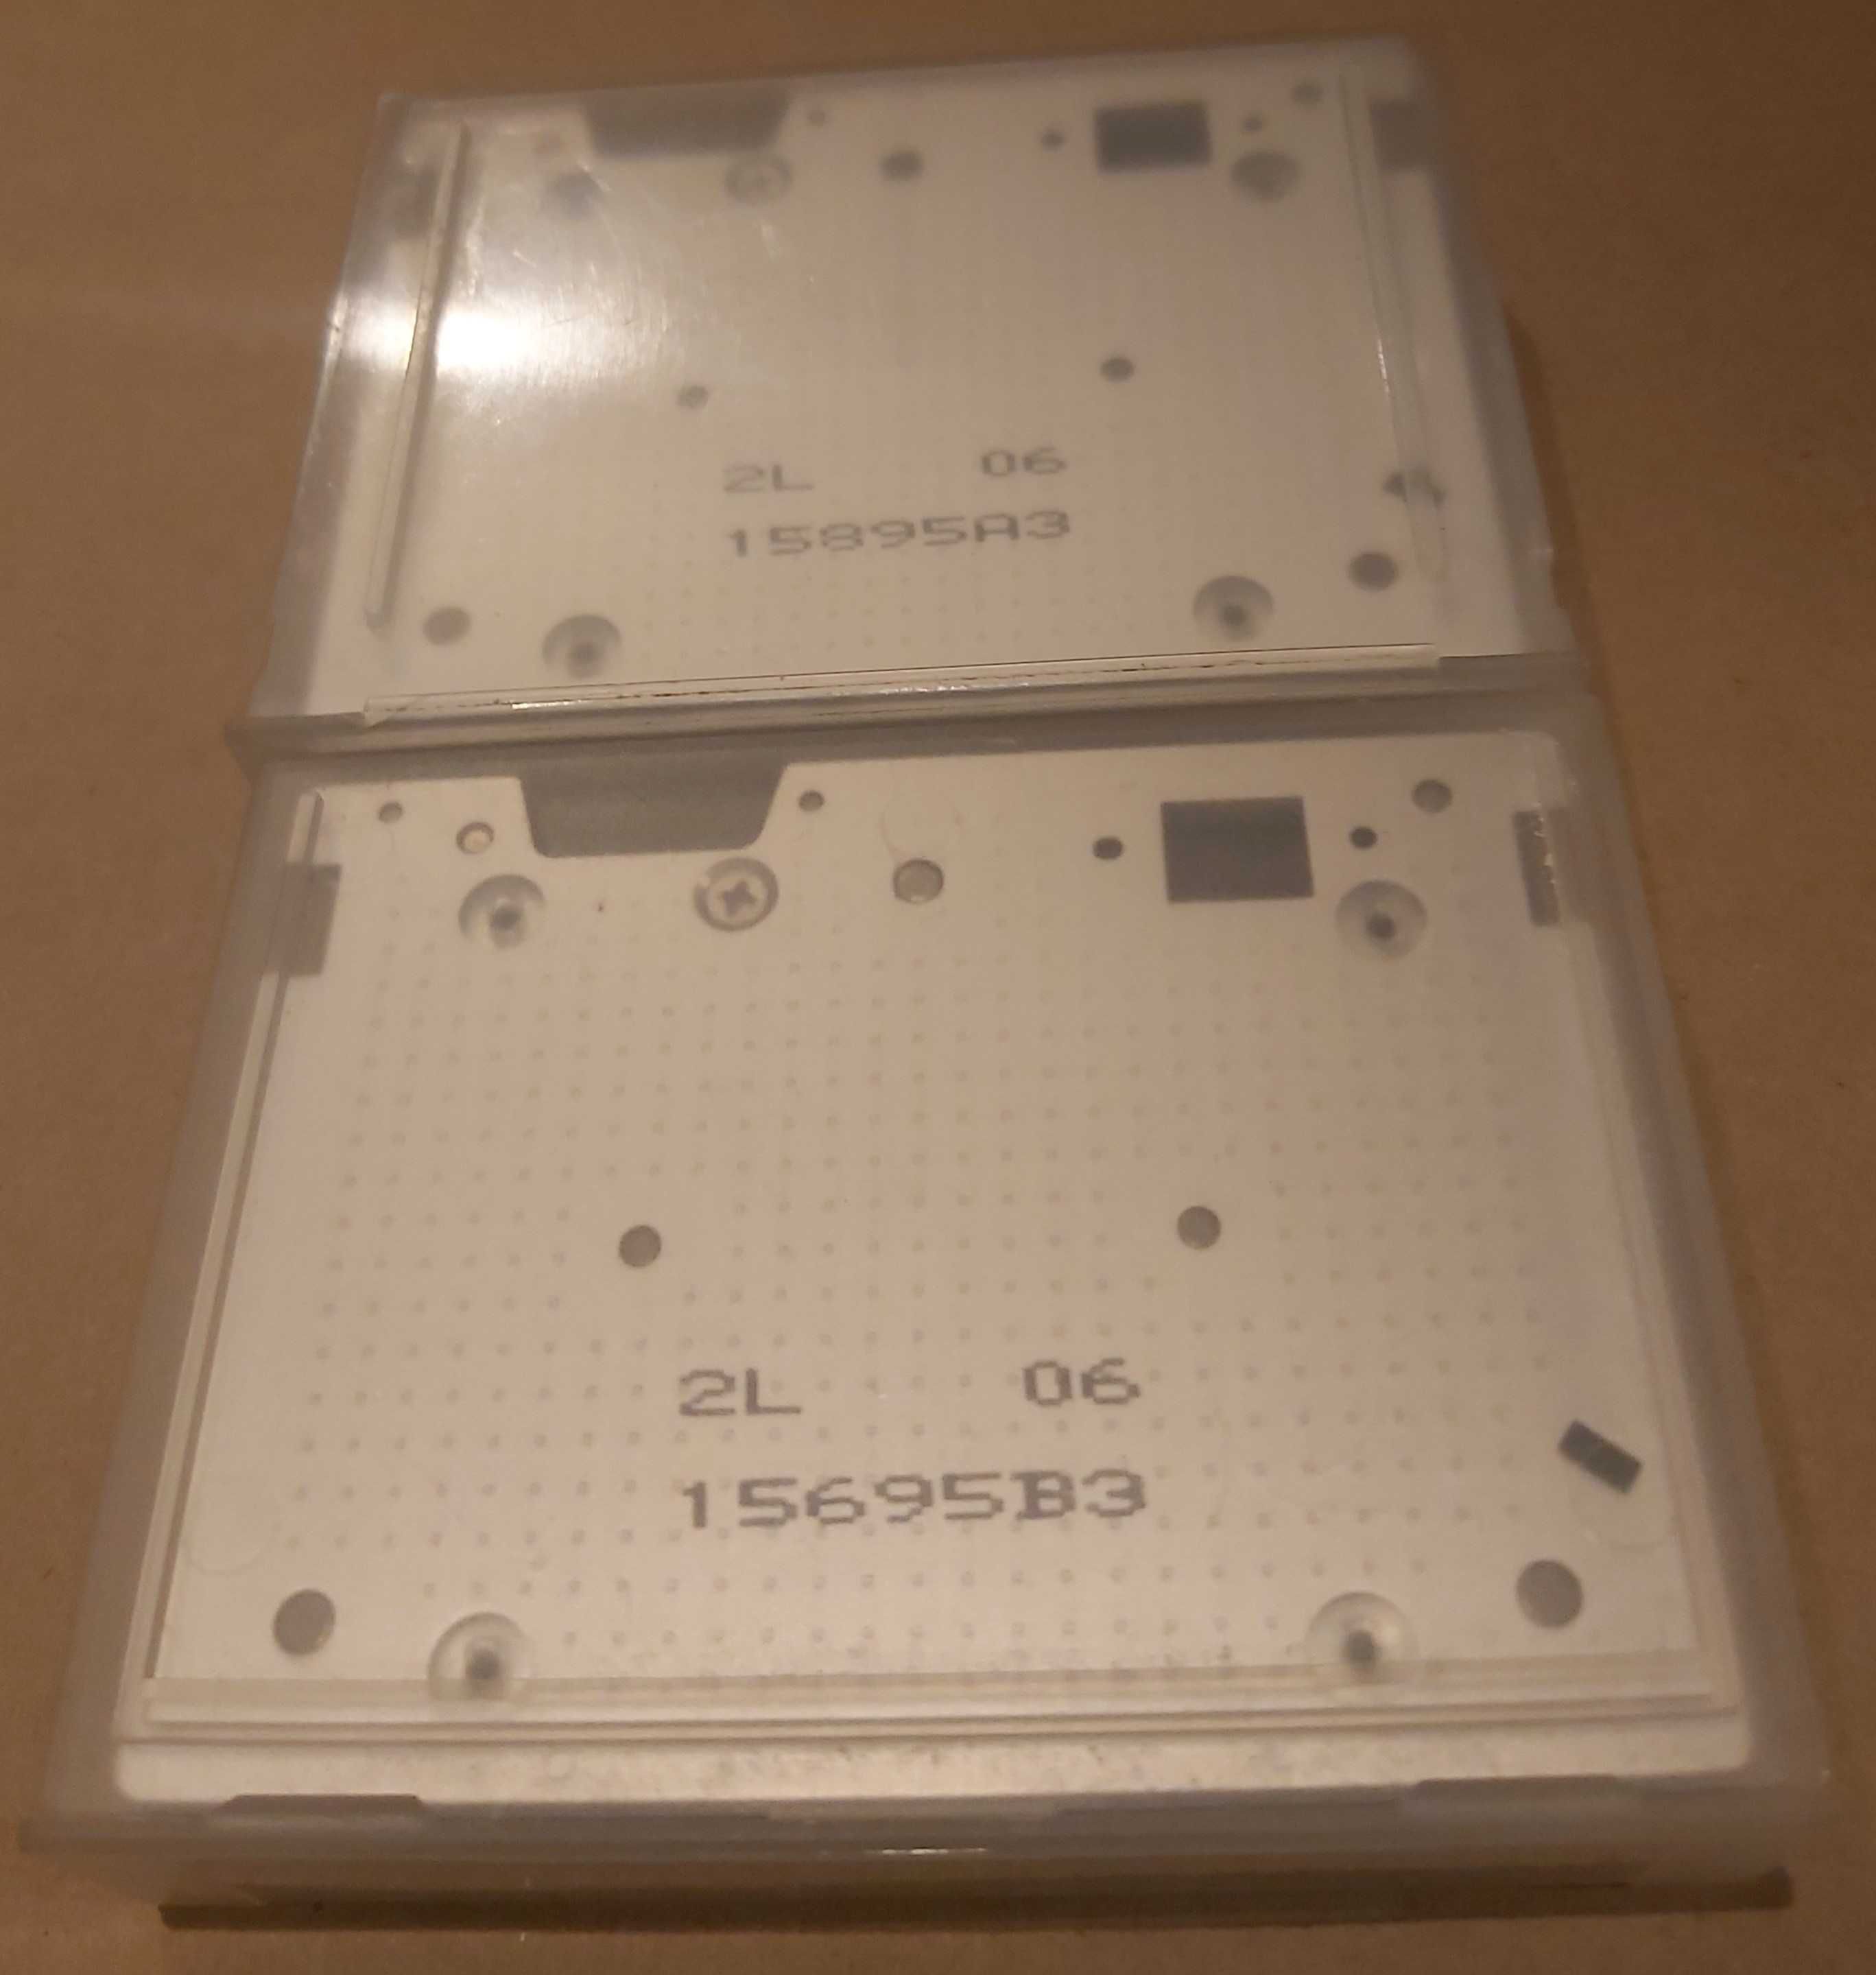 Cassette Data Cartridge DYSAN 100 DY2120 Quarter Inch 120MB 2szt.